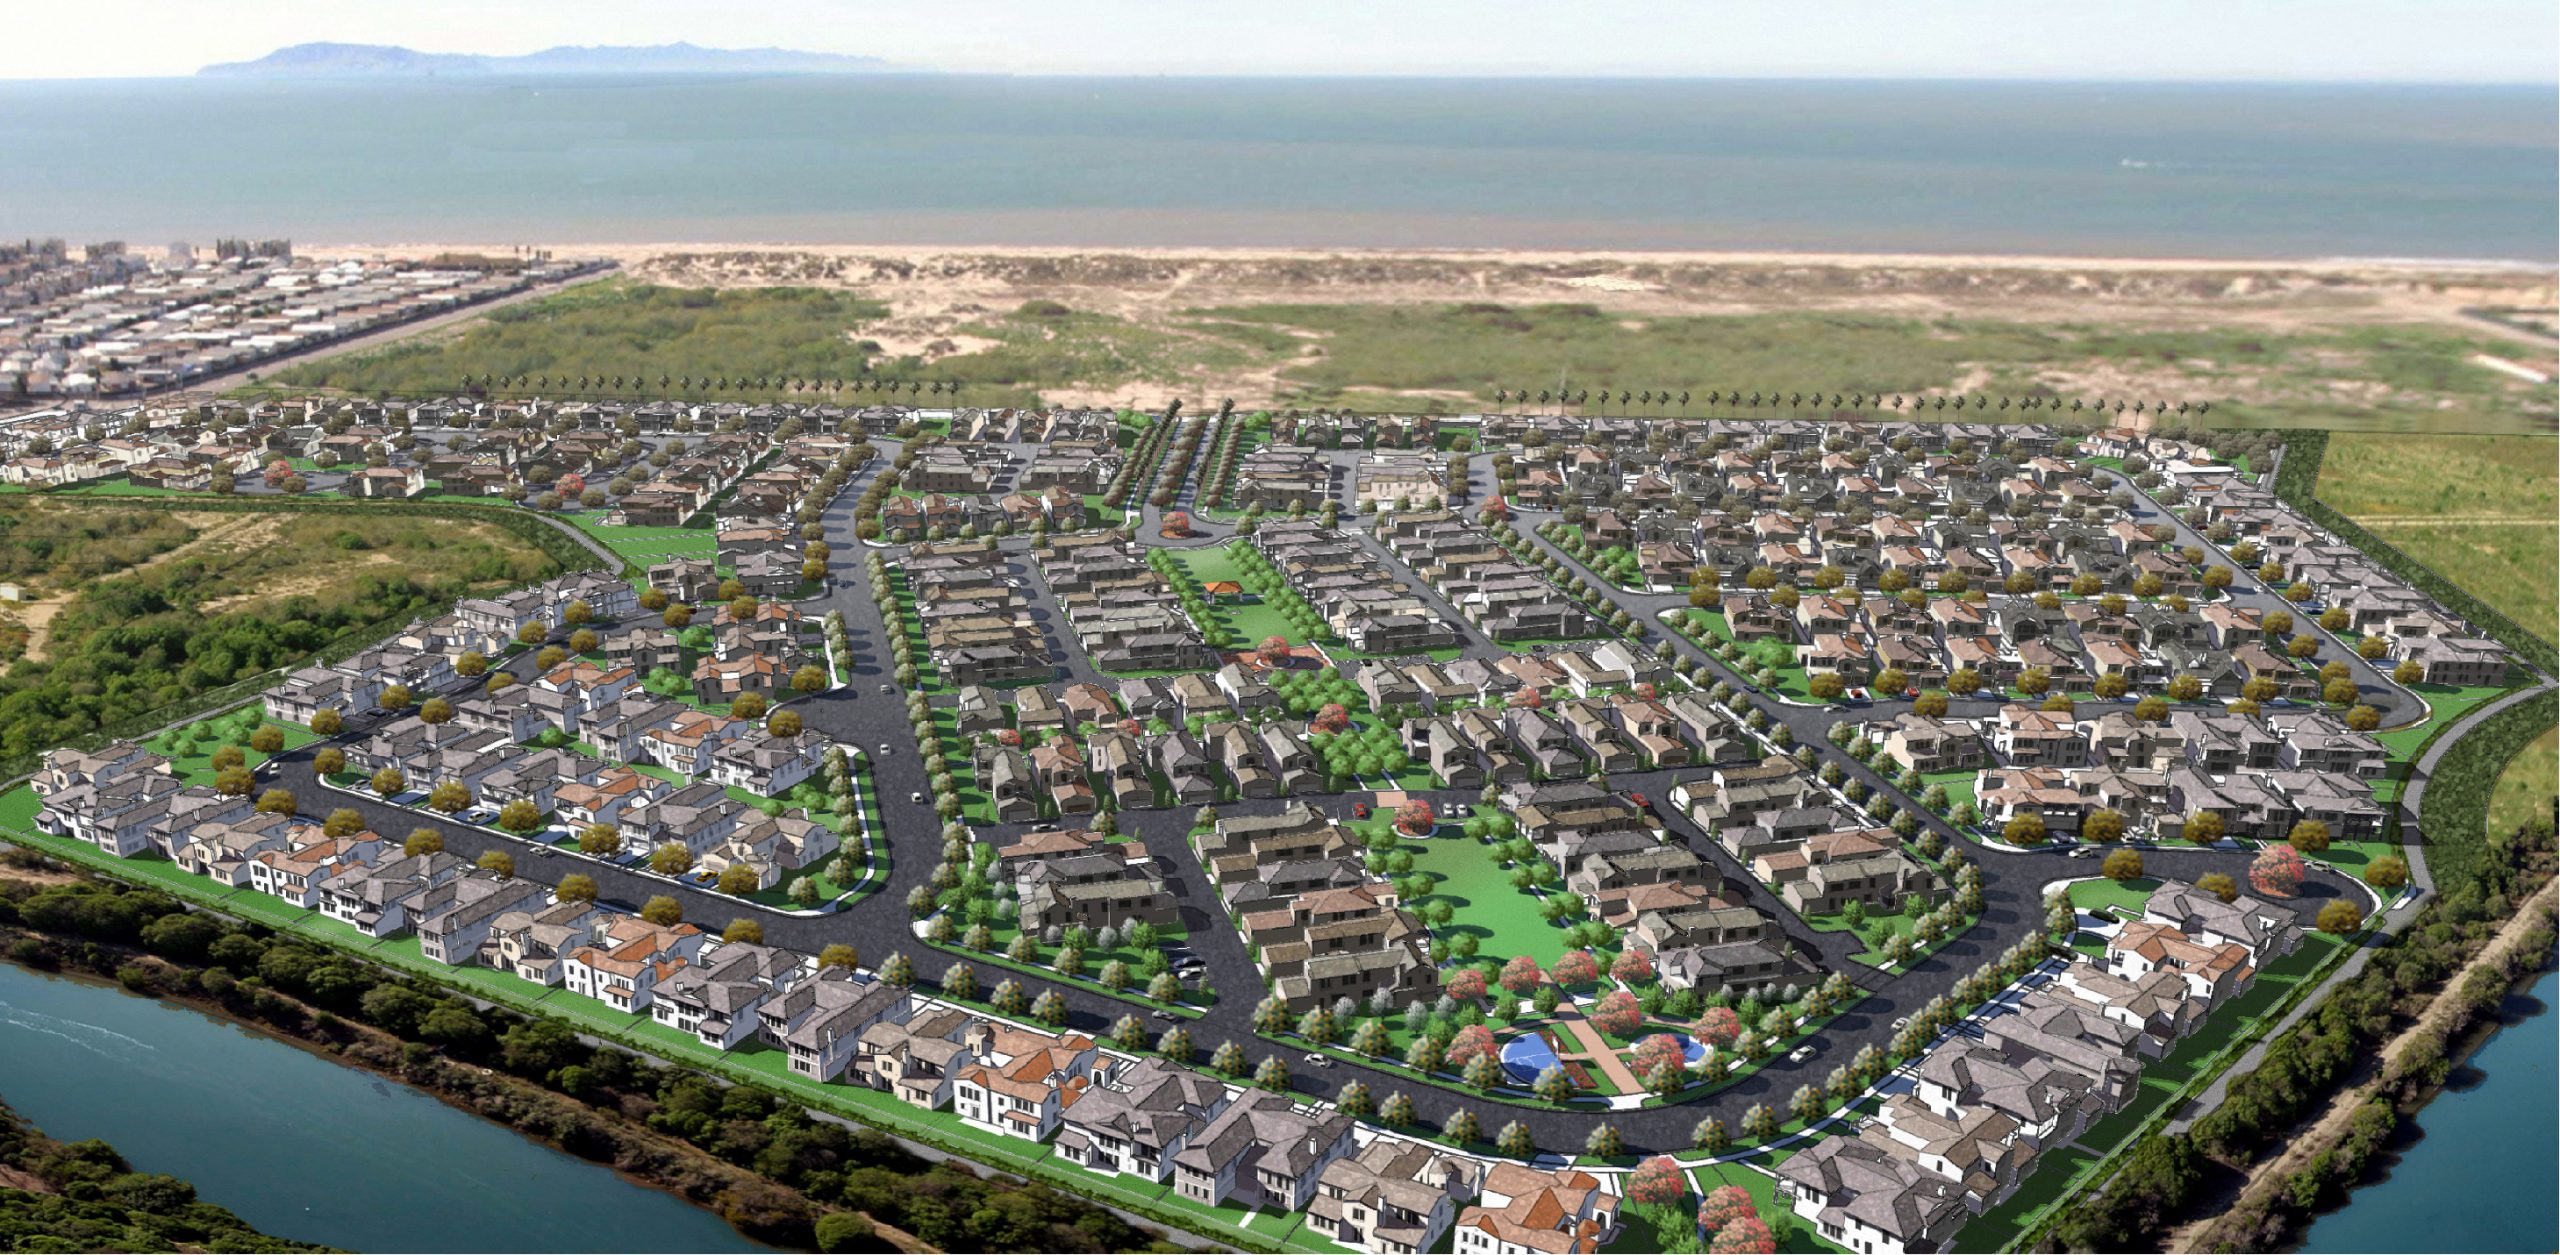 Intergrated Beachfront Development Plan for NMMM